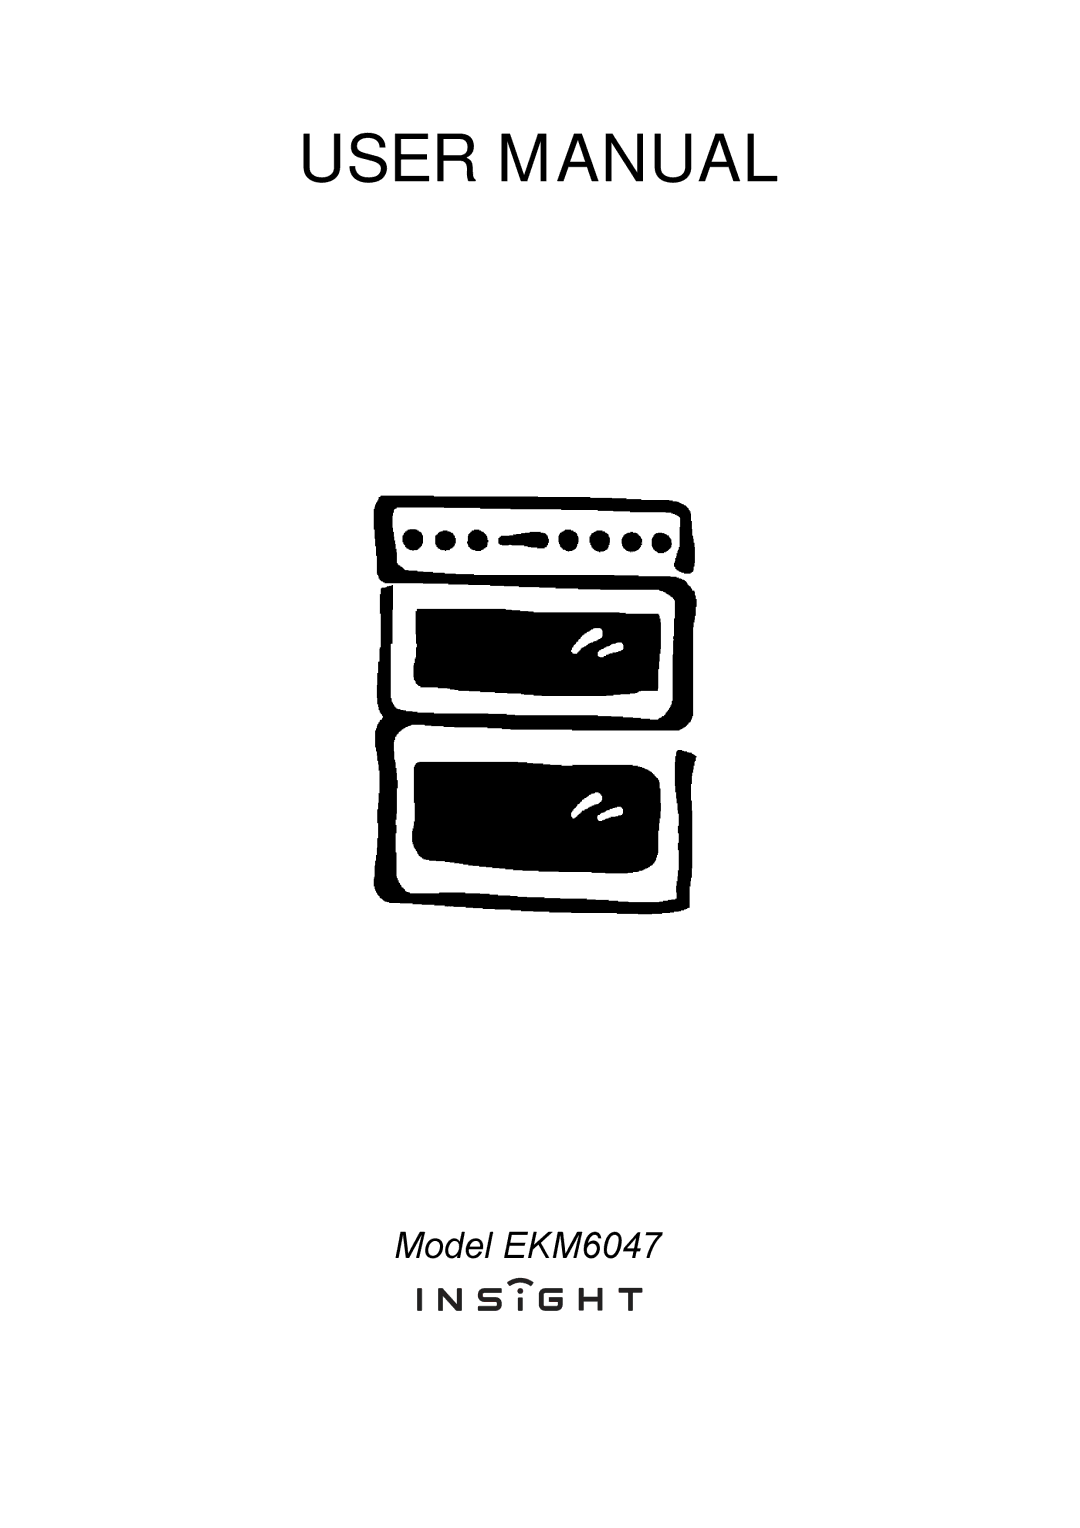 Electrolux user manual Model EKM6047 